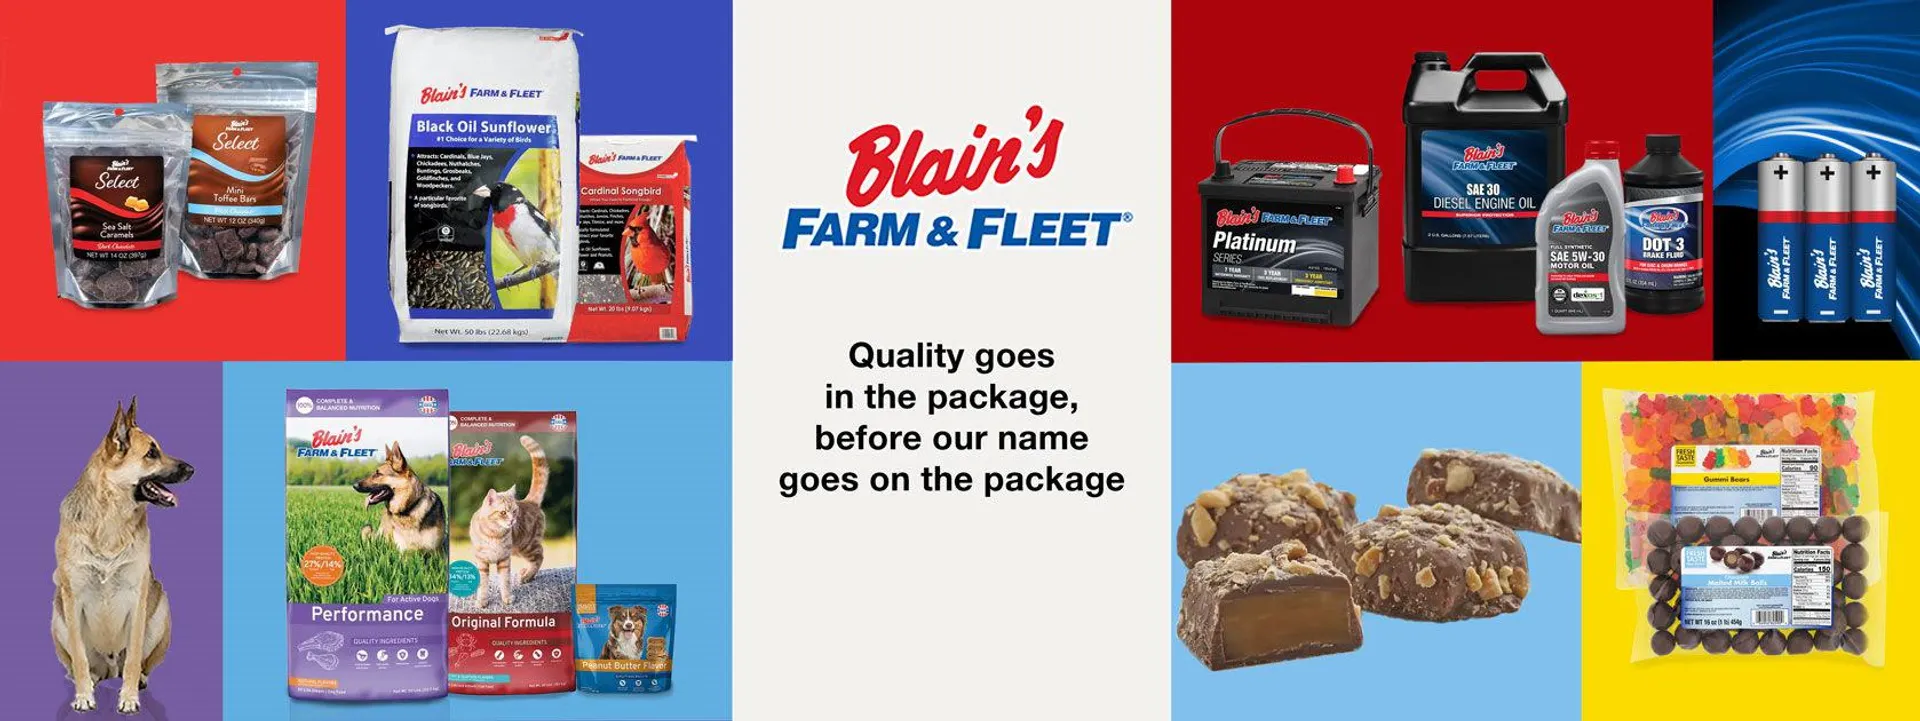 Blain's Farm & Fleet Brand Products